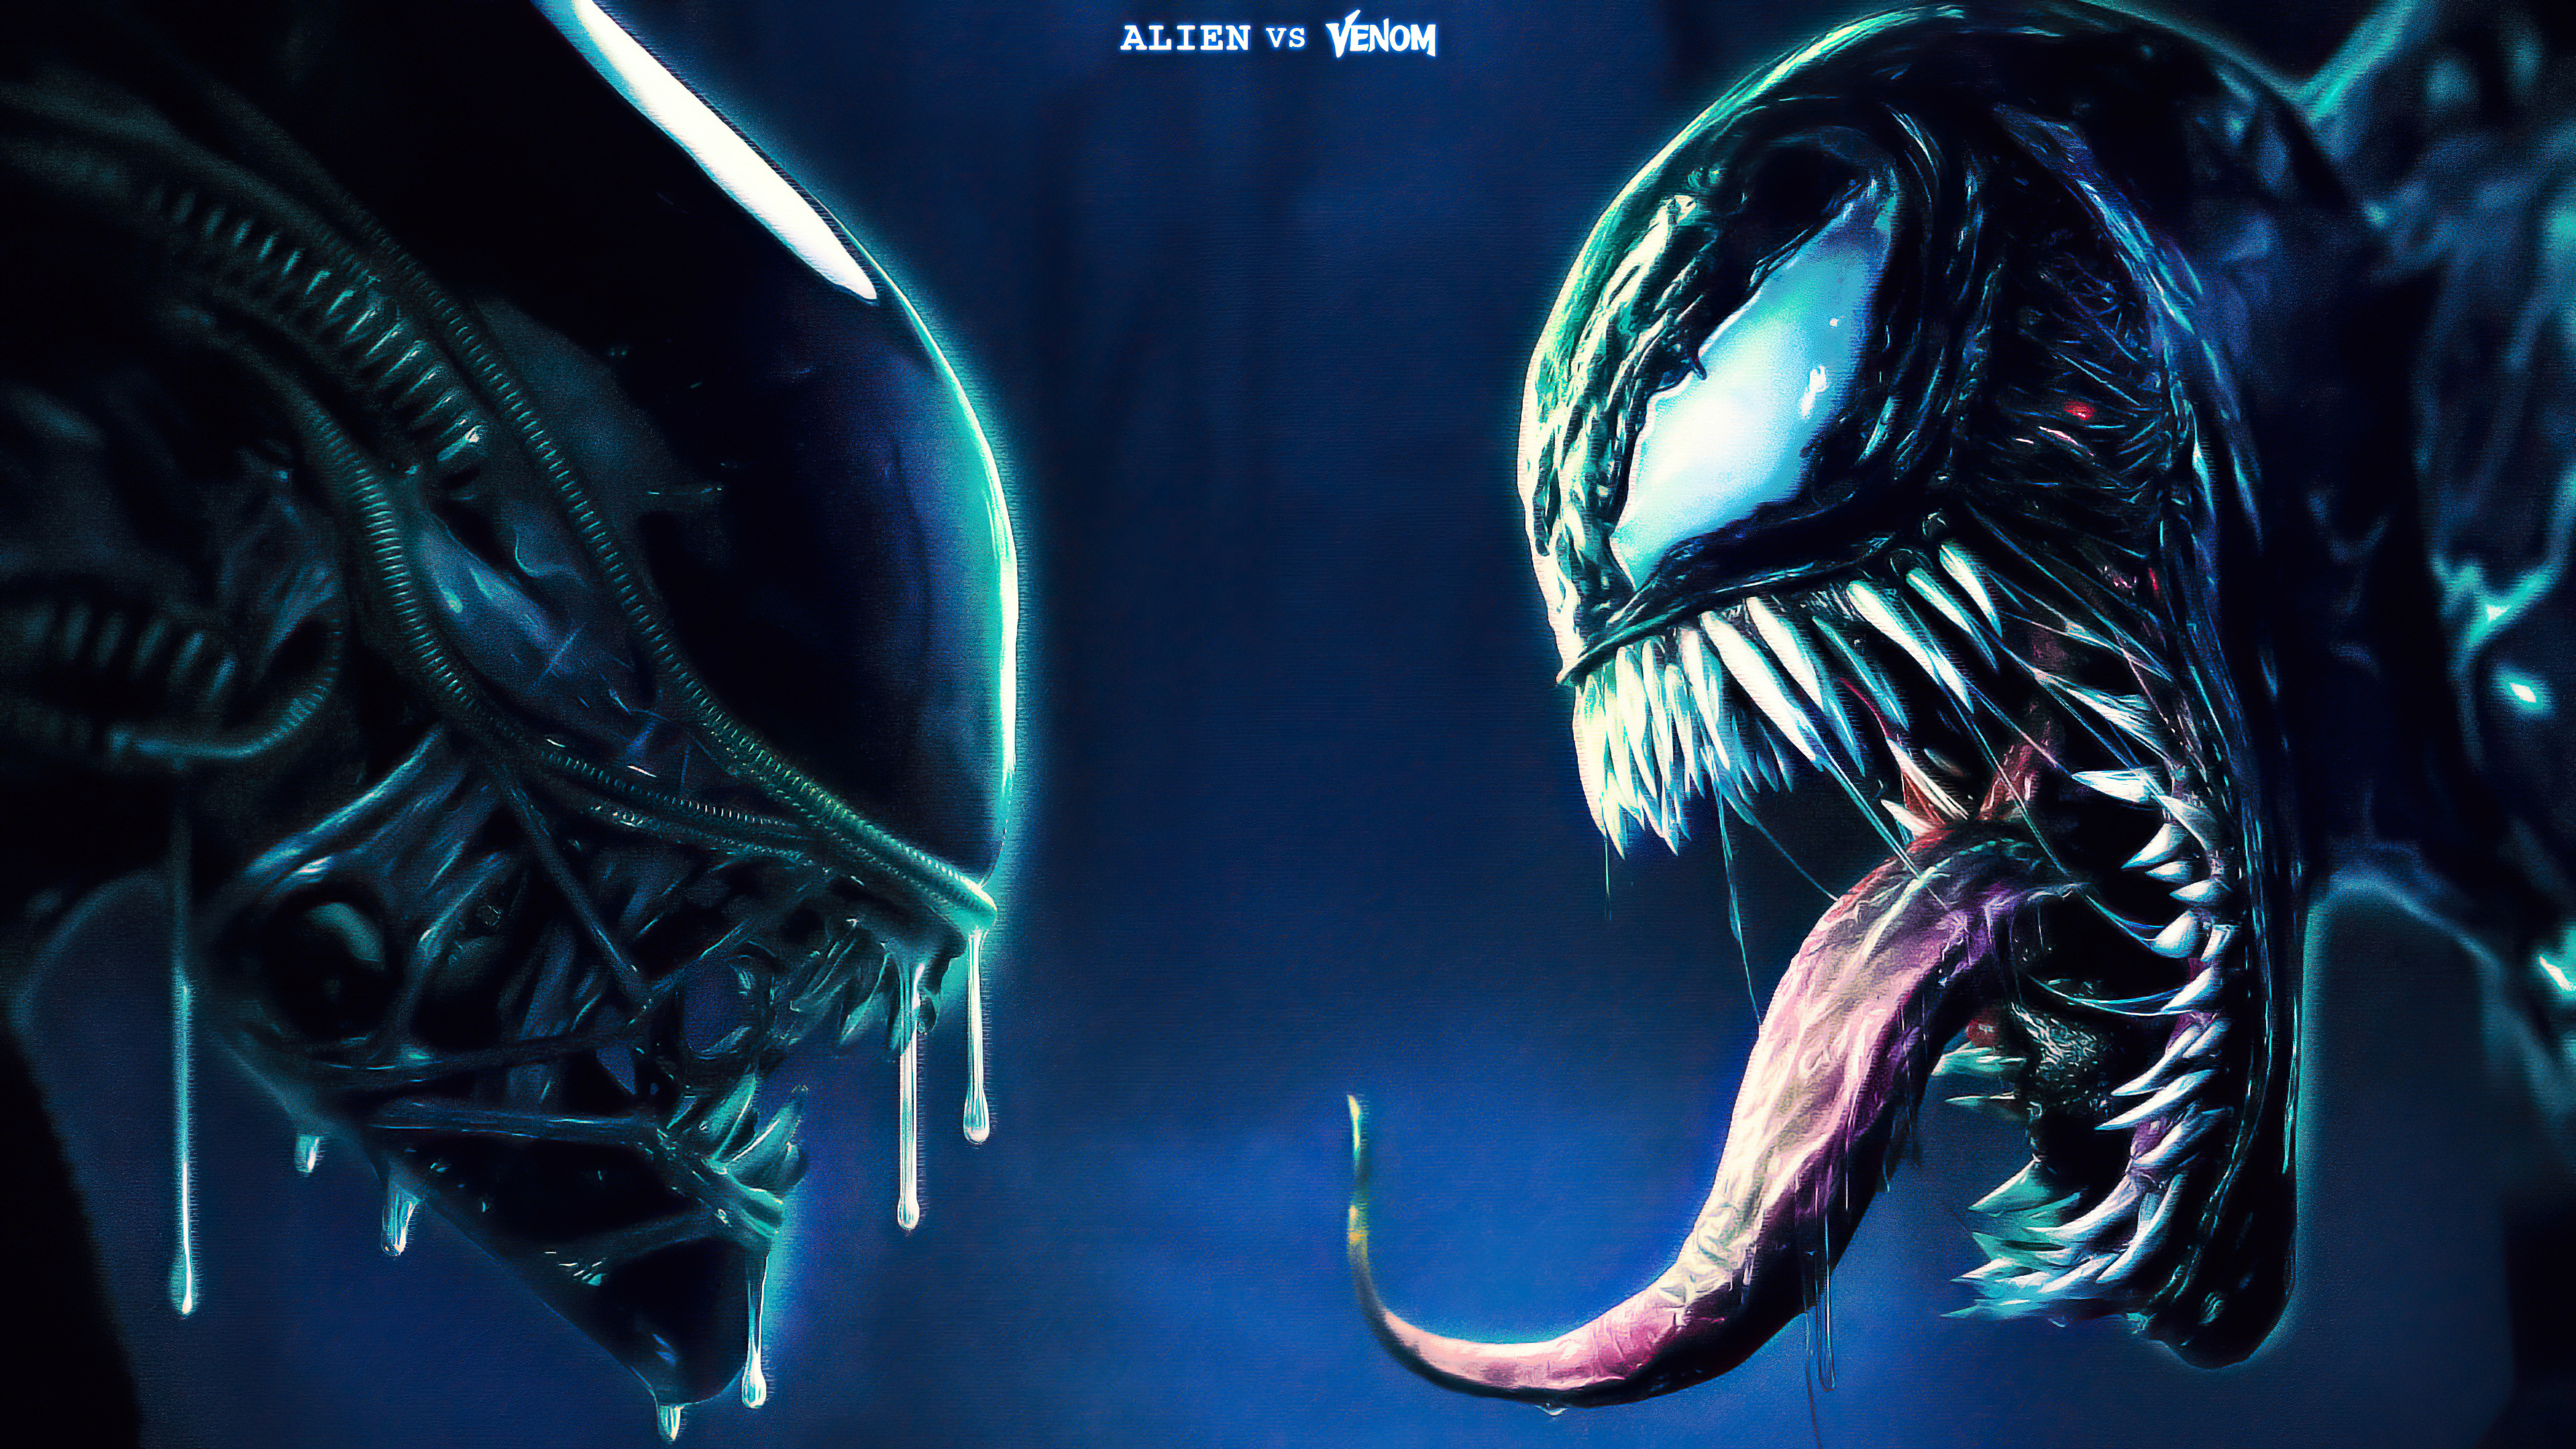 Alien Vs Venom, HD Superheroes, 4k Wallpaper, Image, Background, Photo and Picture